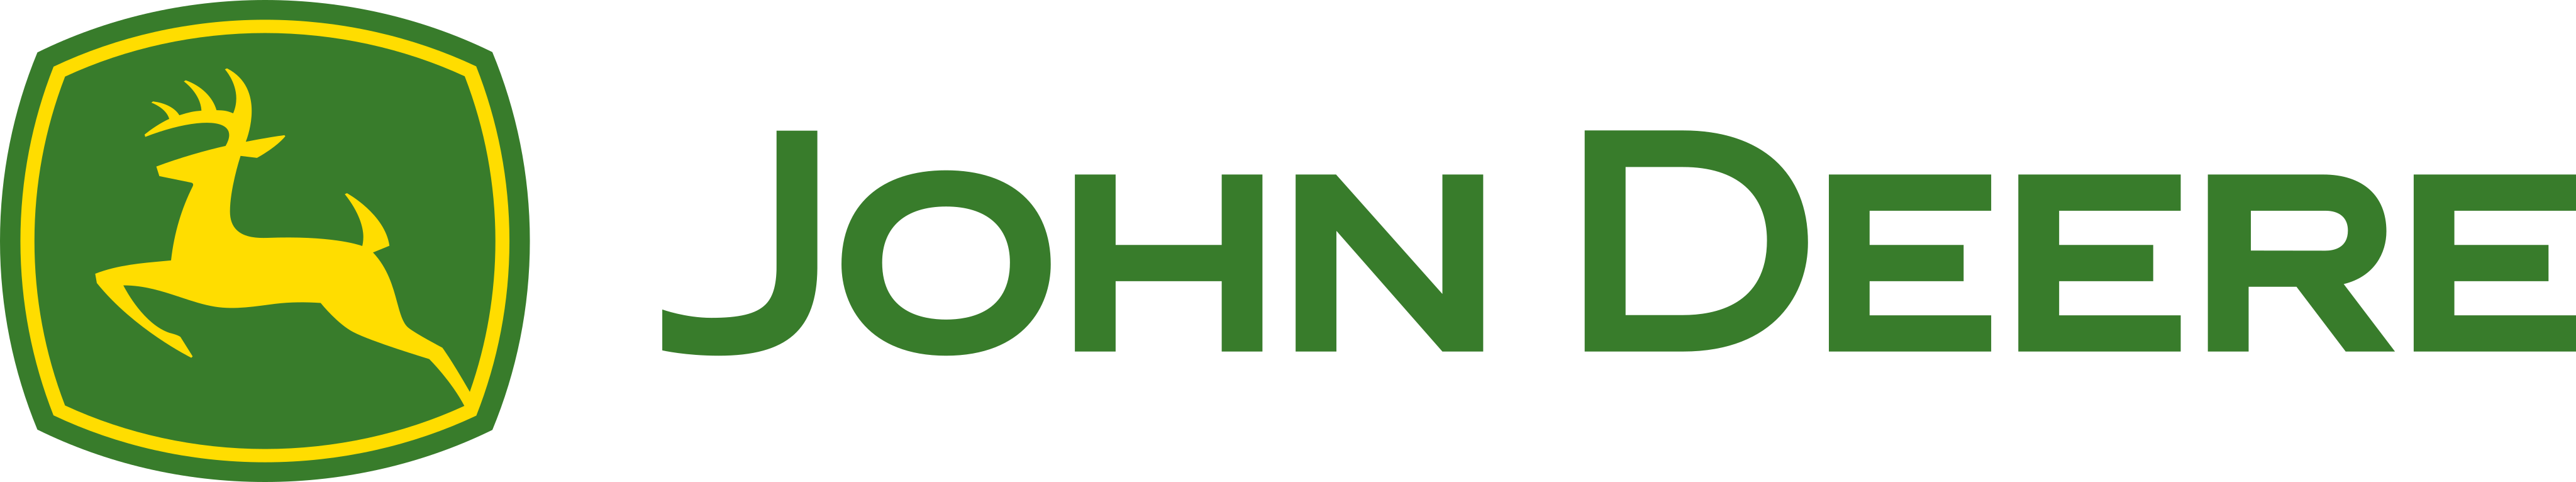 john deere logo - John Deere Logo